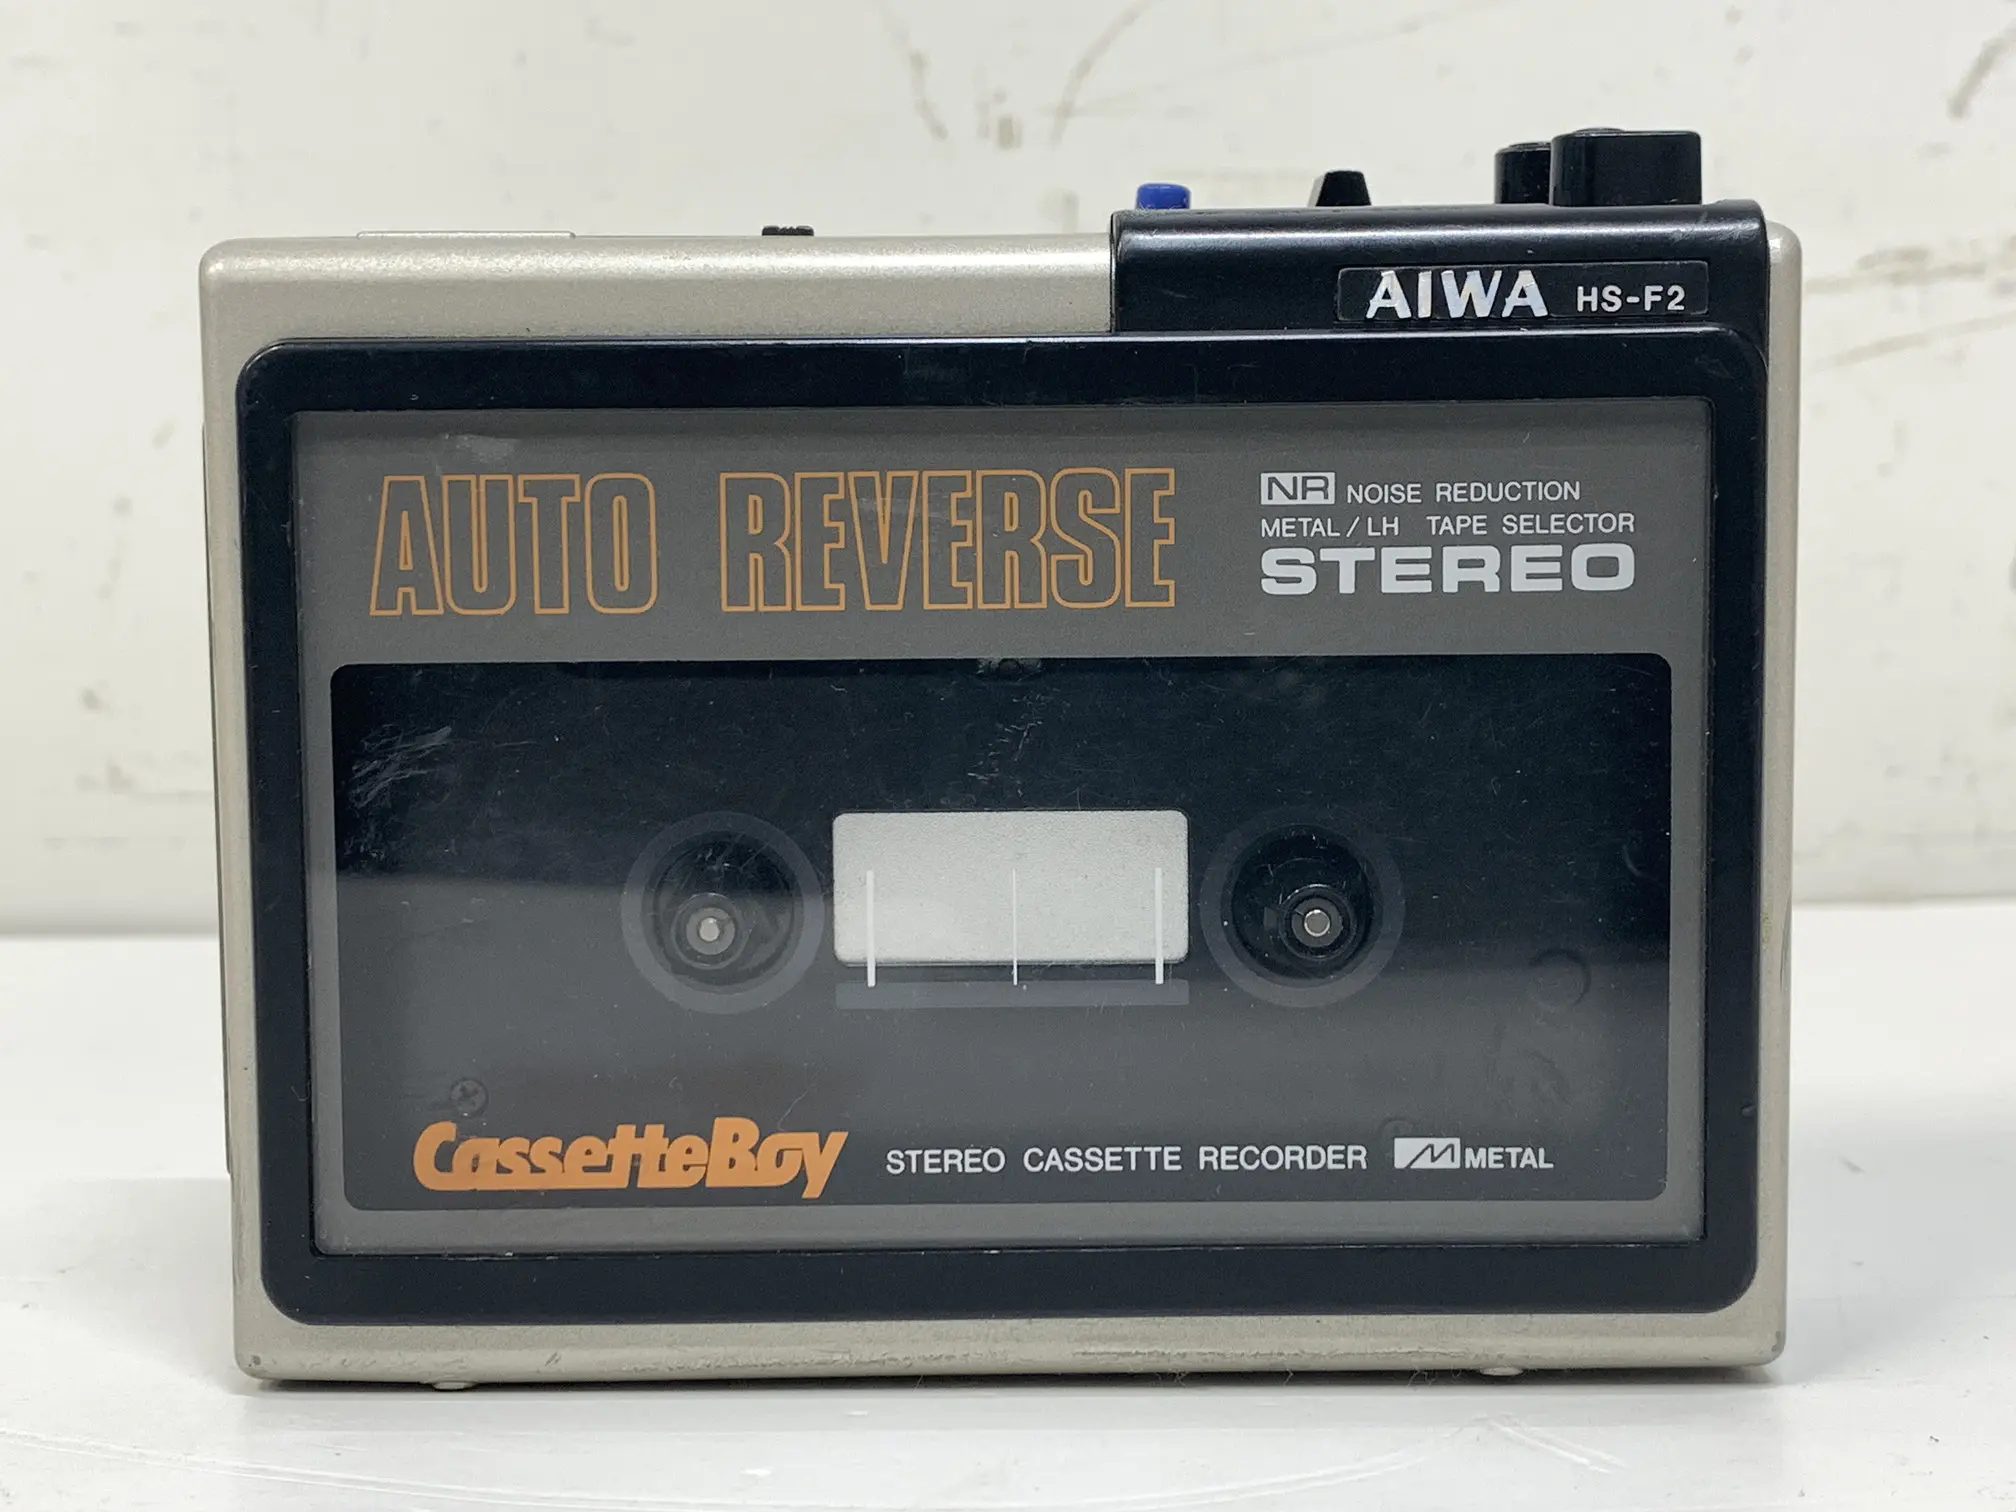 AIWA HS-F2 Cassette Boy アイワ カセットボーイ ポータブルカセット